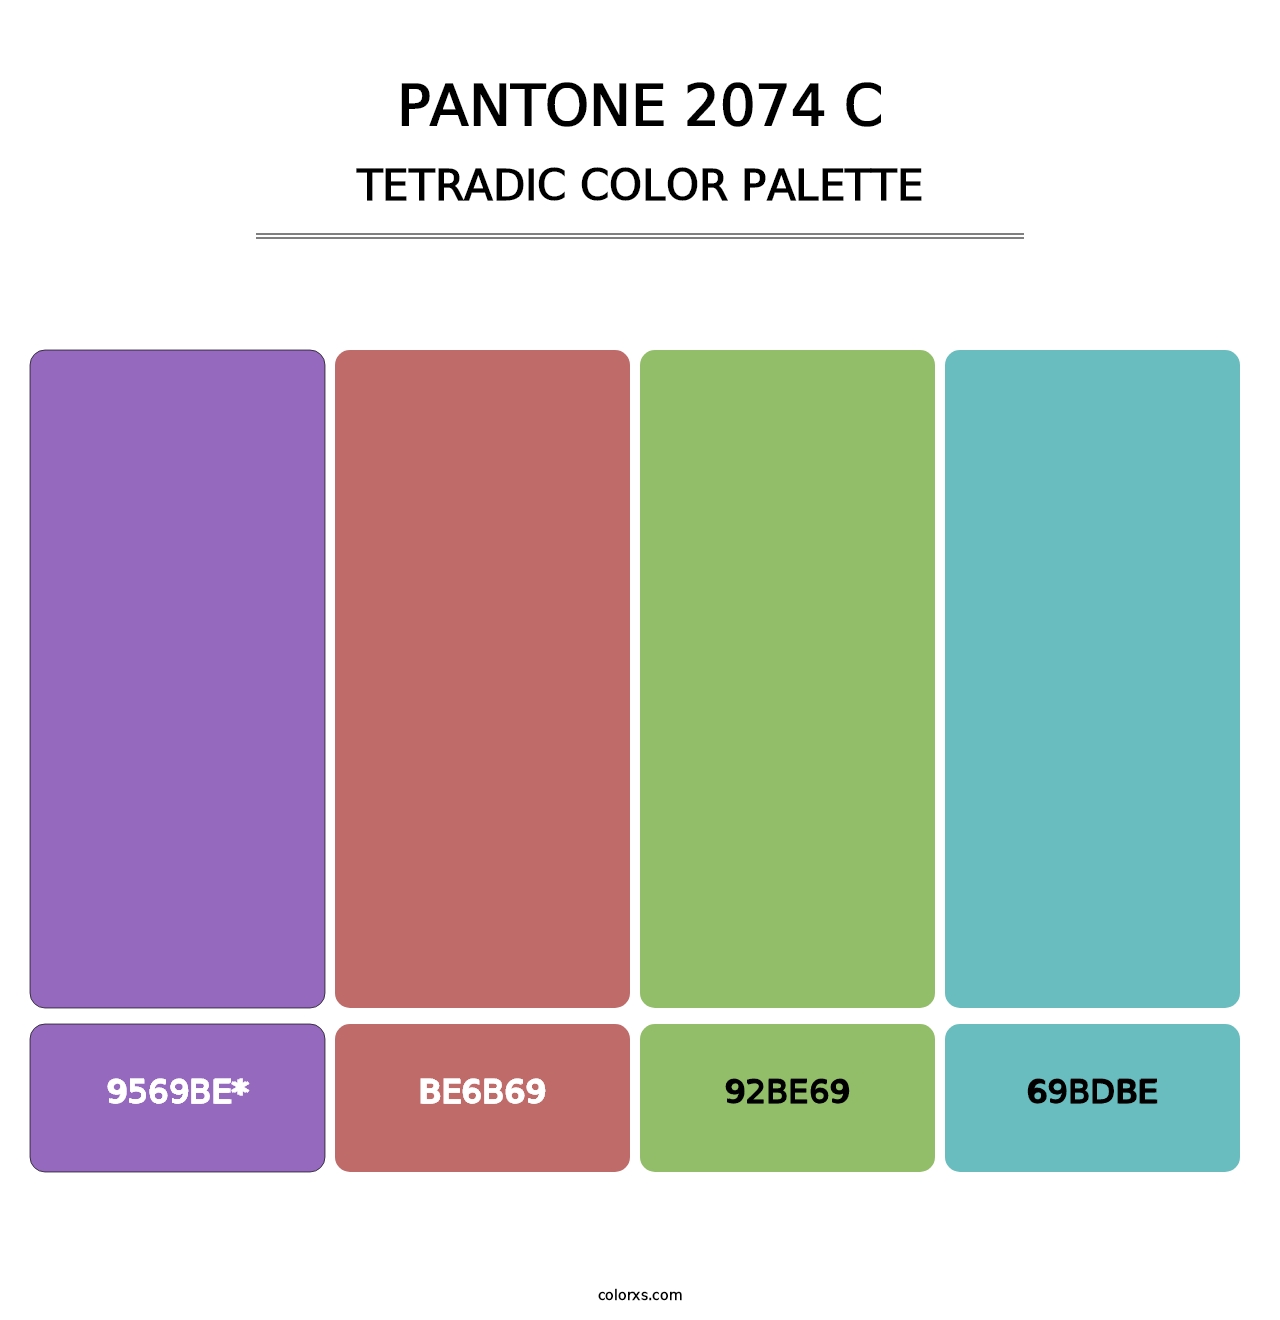 PANTONE 2074 C - Tetradic Color Palette